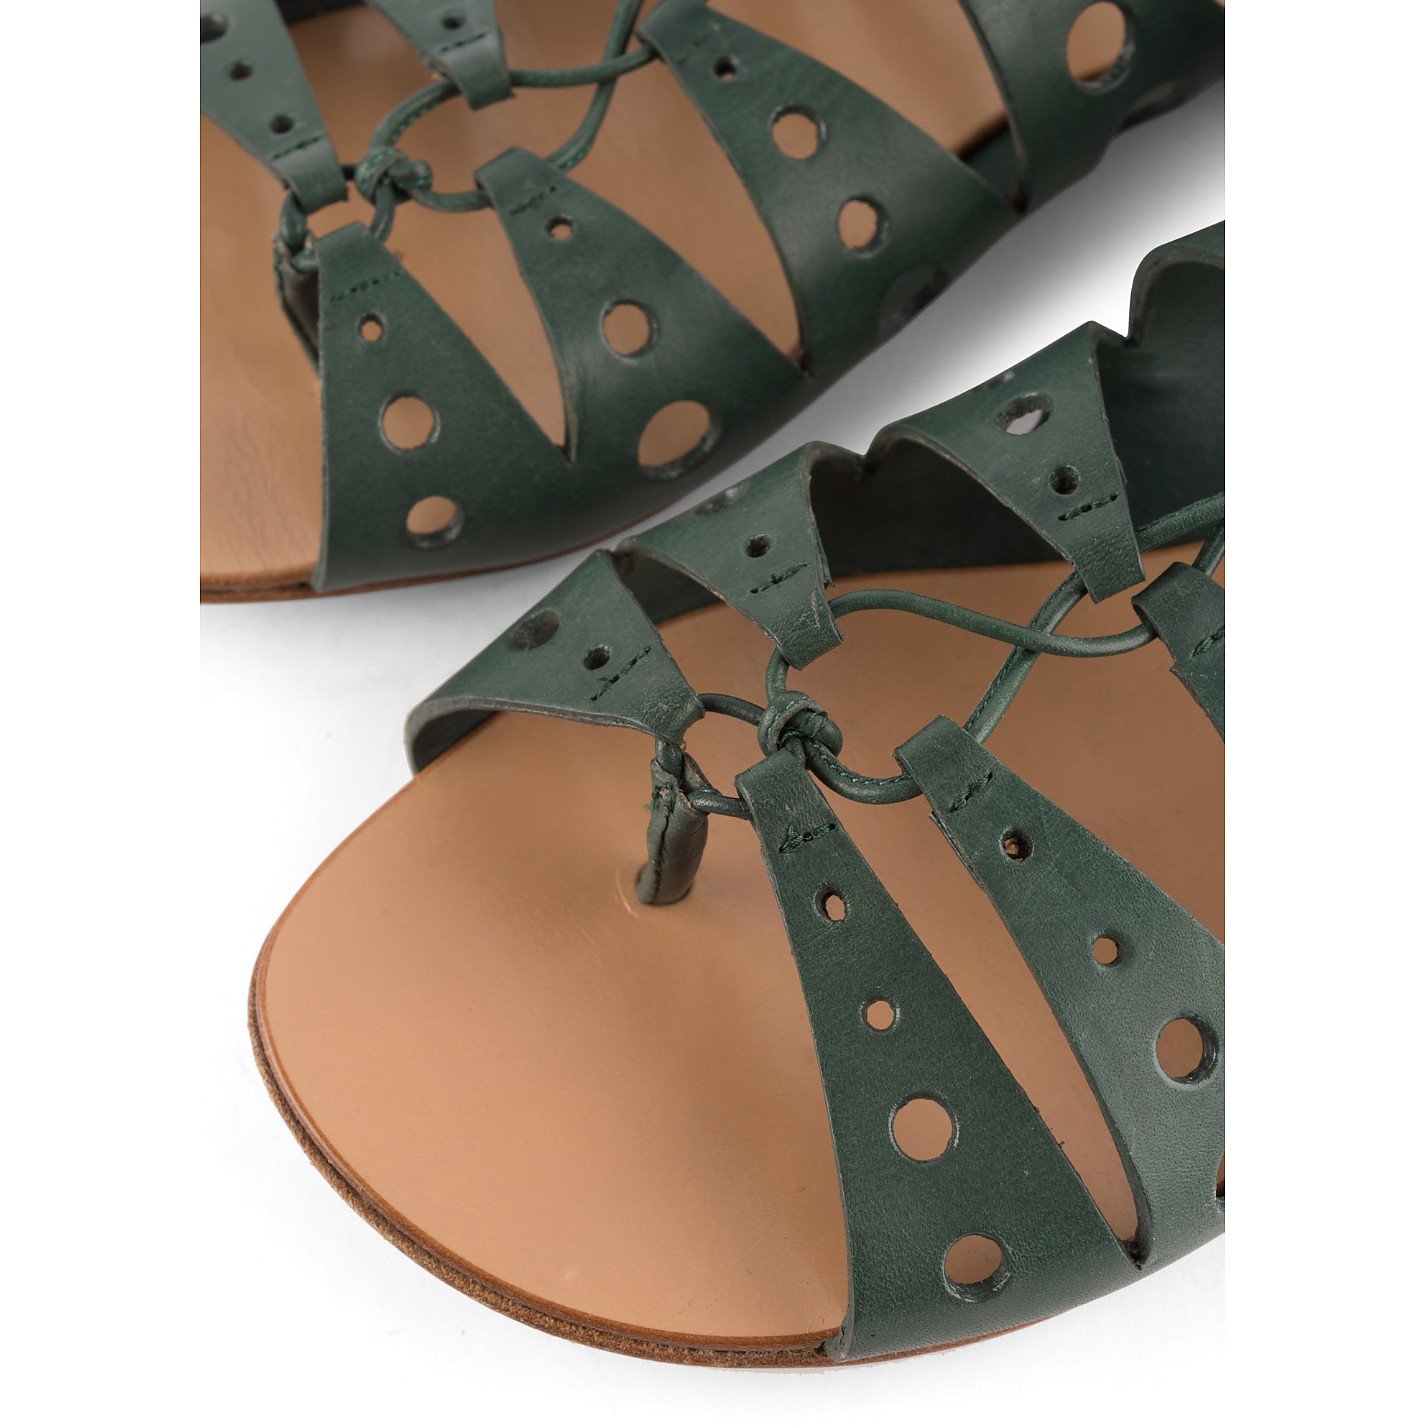 Proenza Schouler Flat Gladiator Sandals